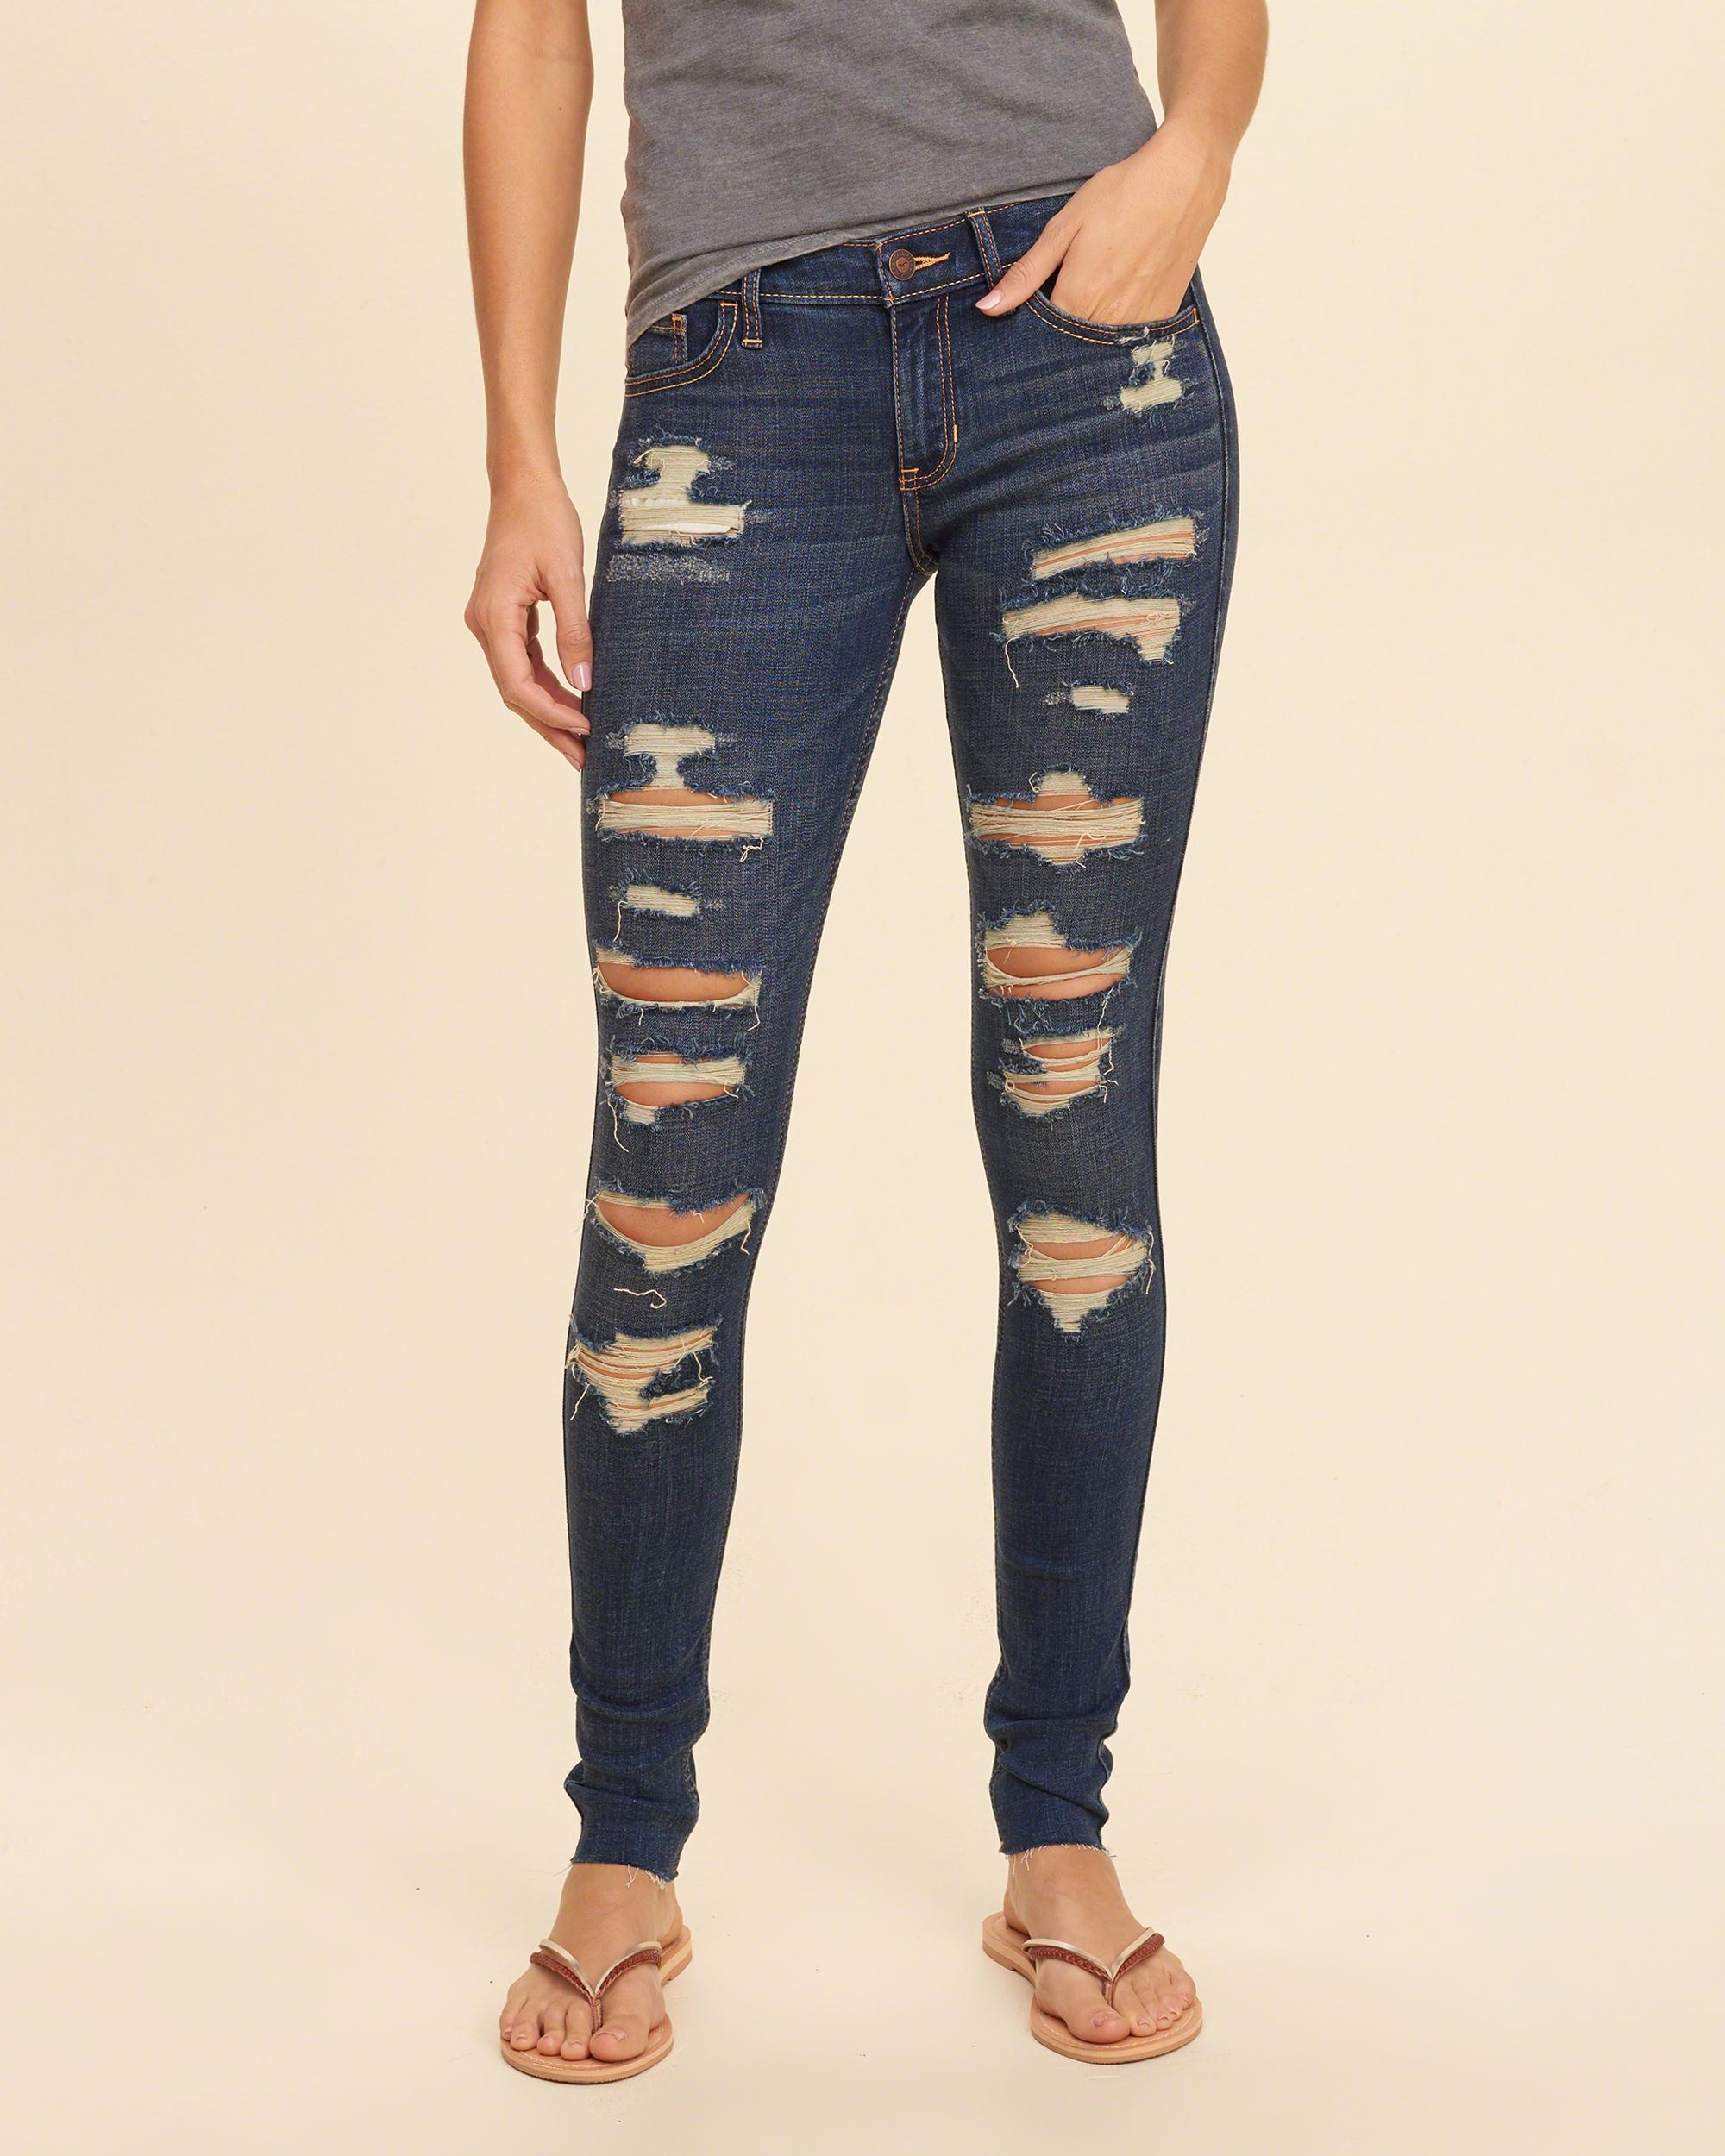 Lyst - Hollister Shredded Low-rise Super Skinny Jeans in Blue